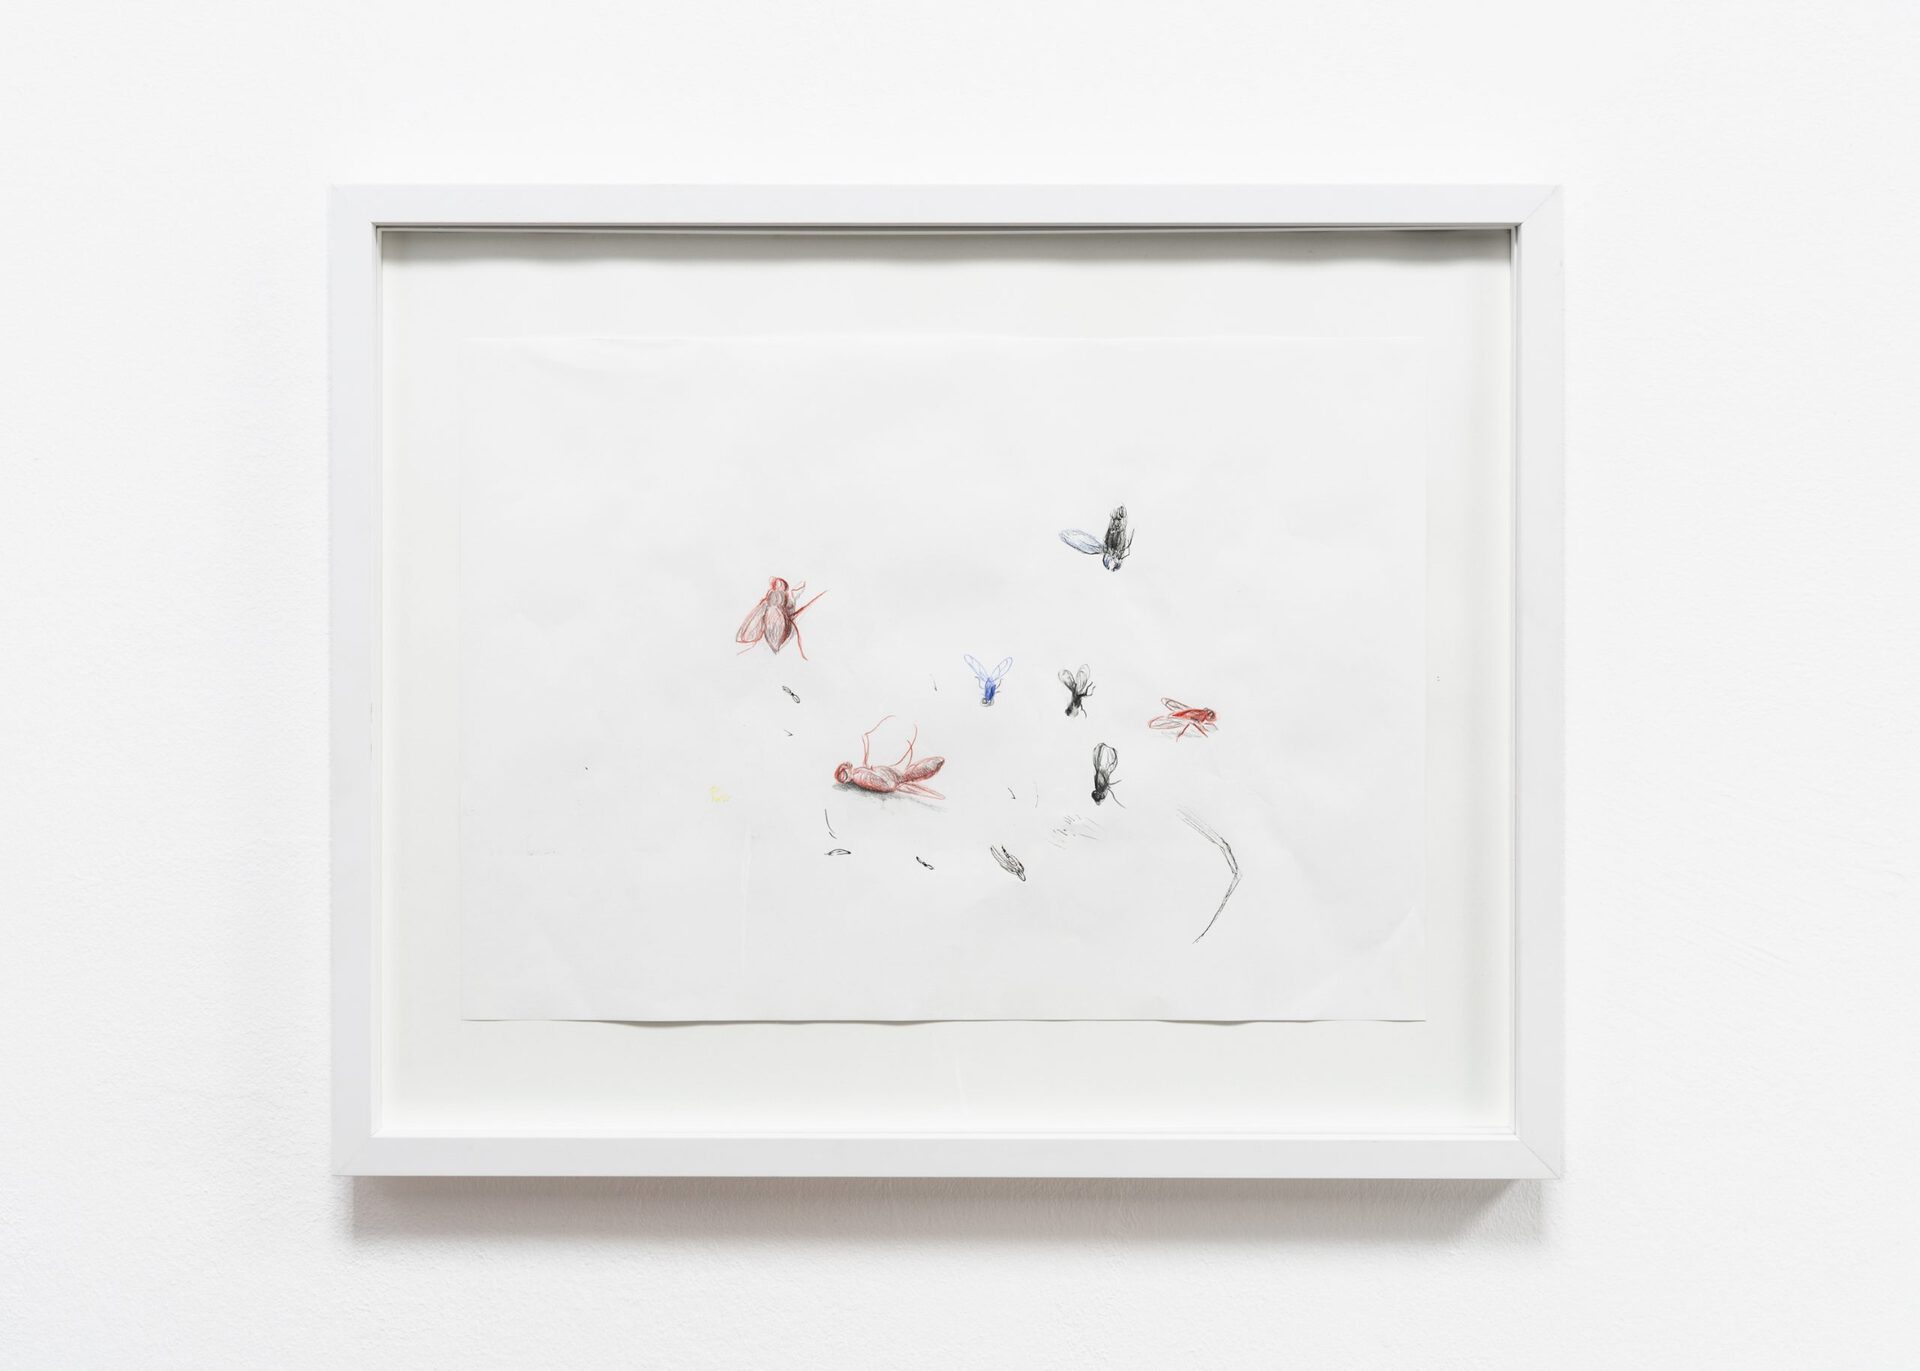 Bradley Davies, "untitled", preparatory sketch for fly paintings, 29,7 x 42 cm (42,,5 x 52,5 cm framed), 2020